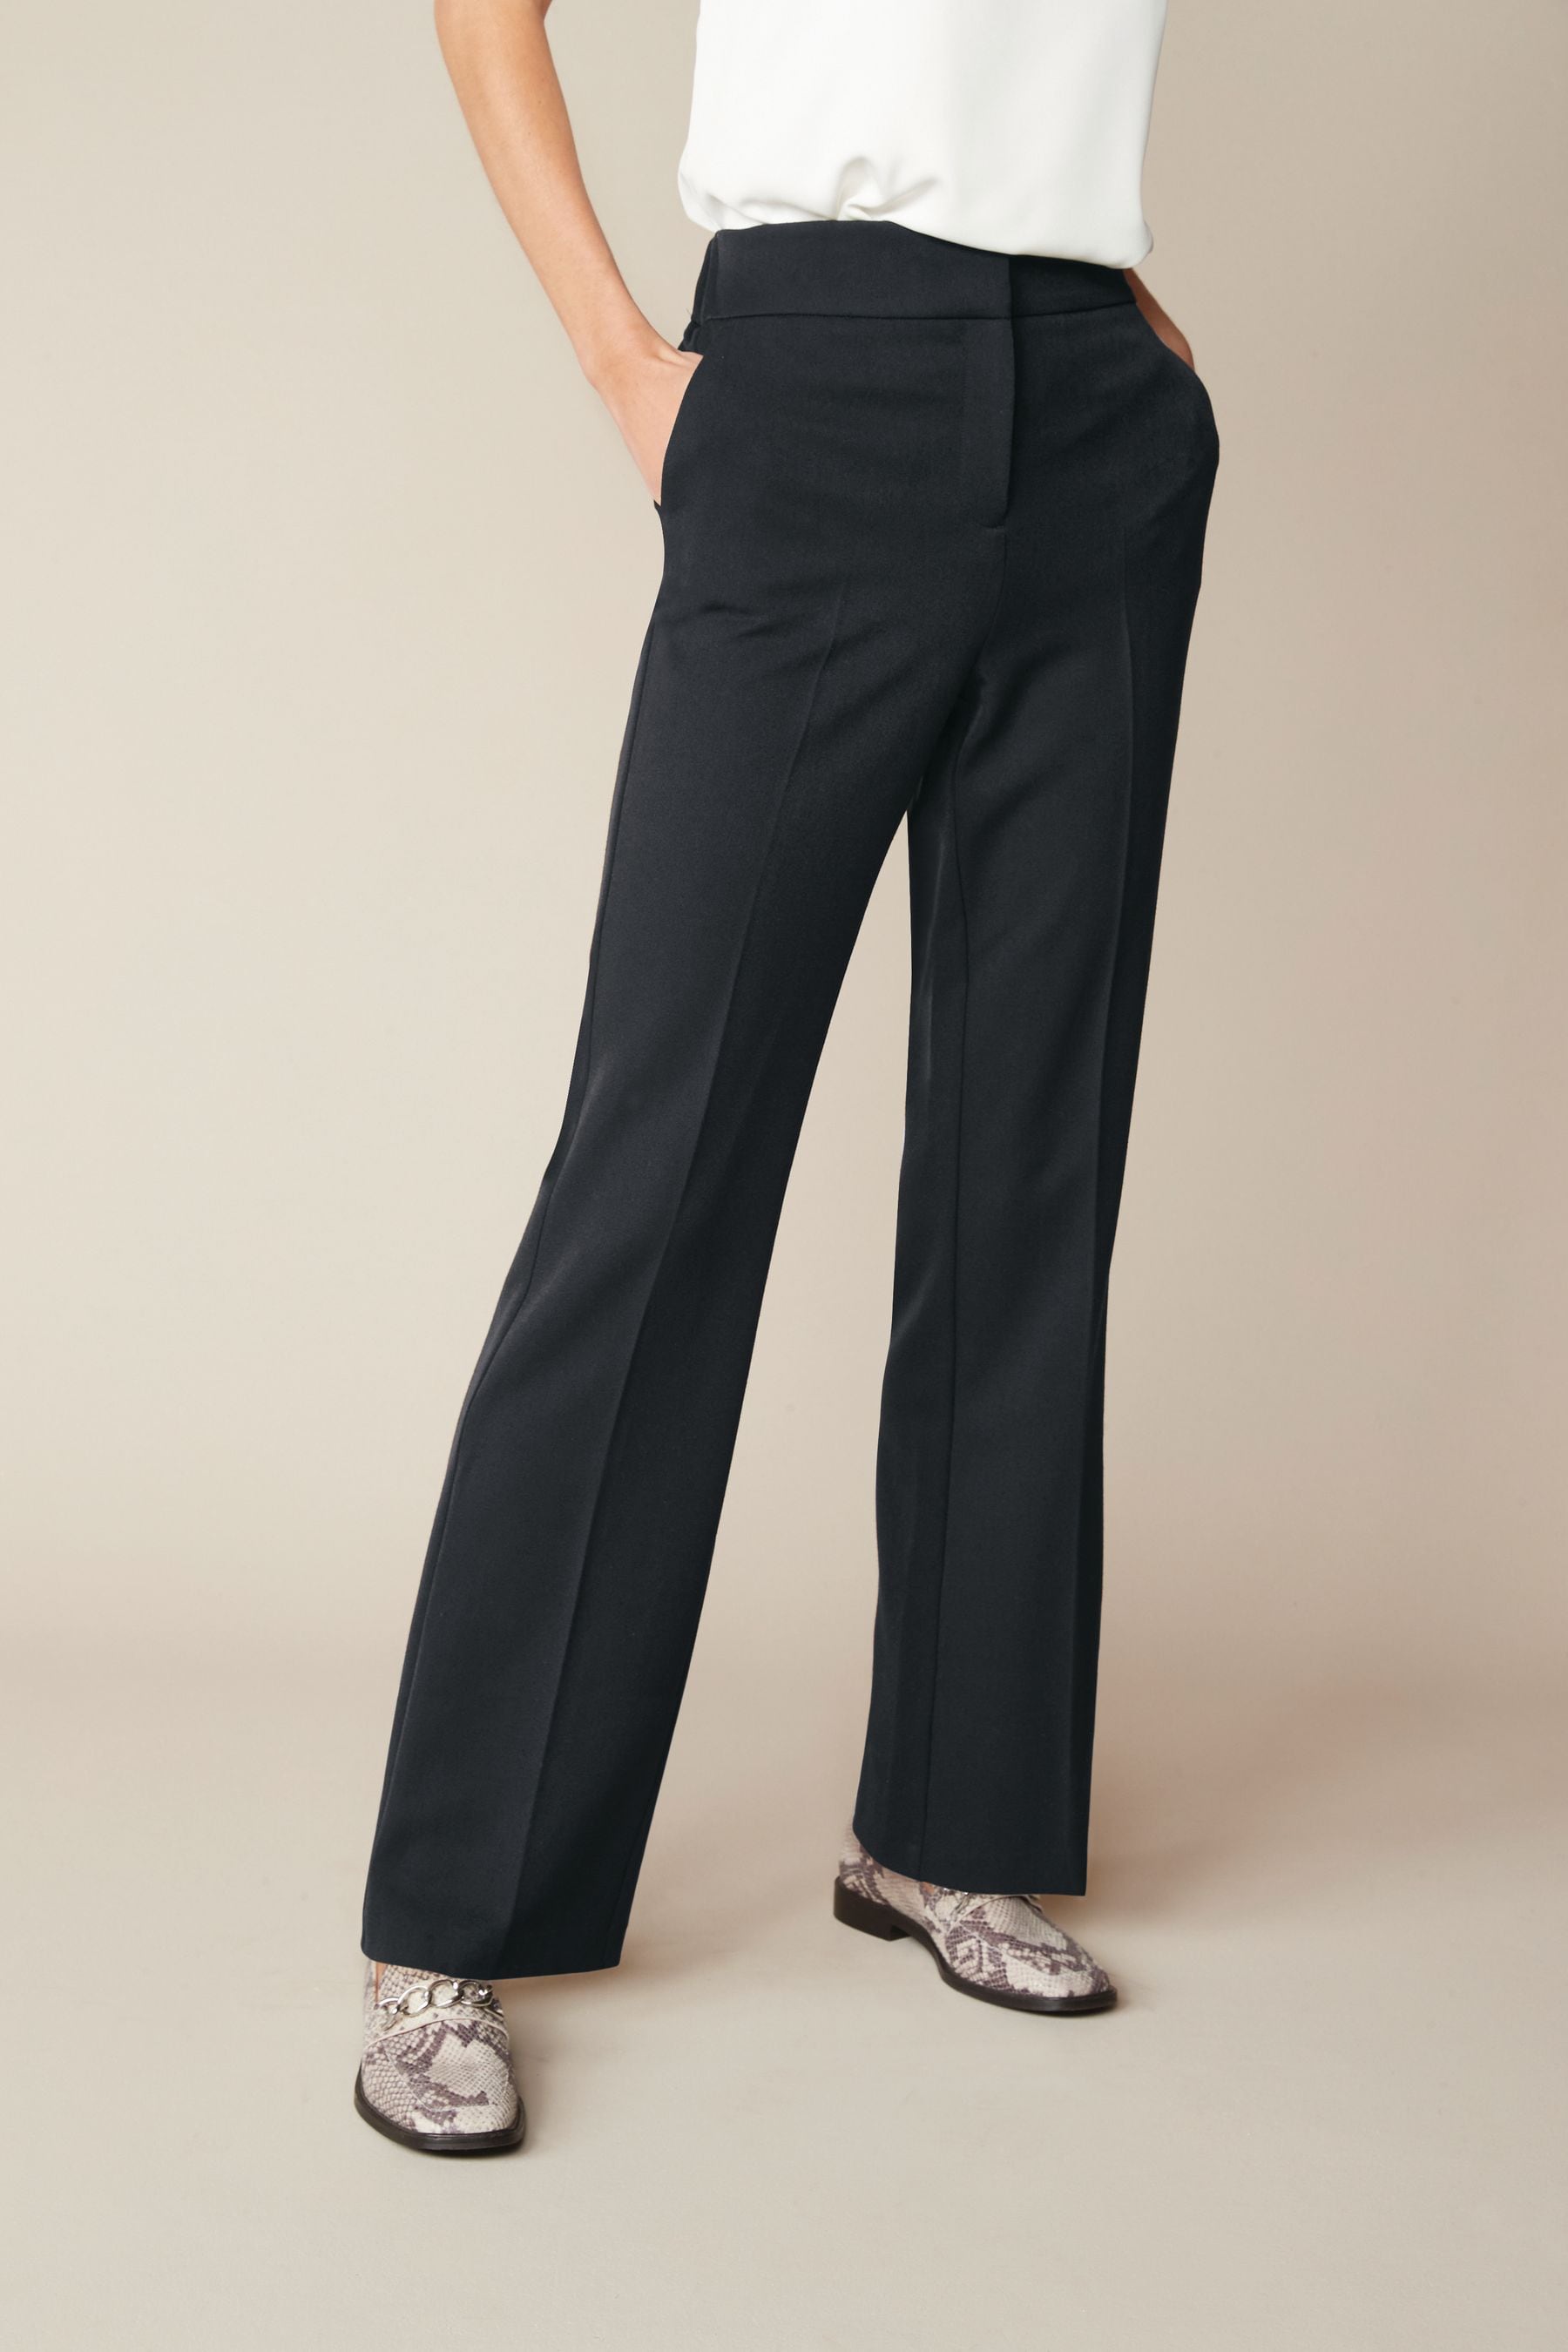 HAORUN Men Corduroy Bell Bottom Flares Pants Slim Fit 60s 70s Vintage Bootcut  Trousers Black at Amazon Mens Clothing store